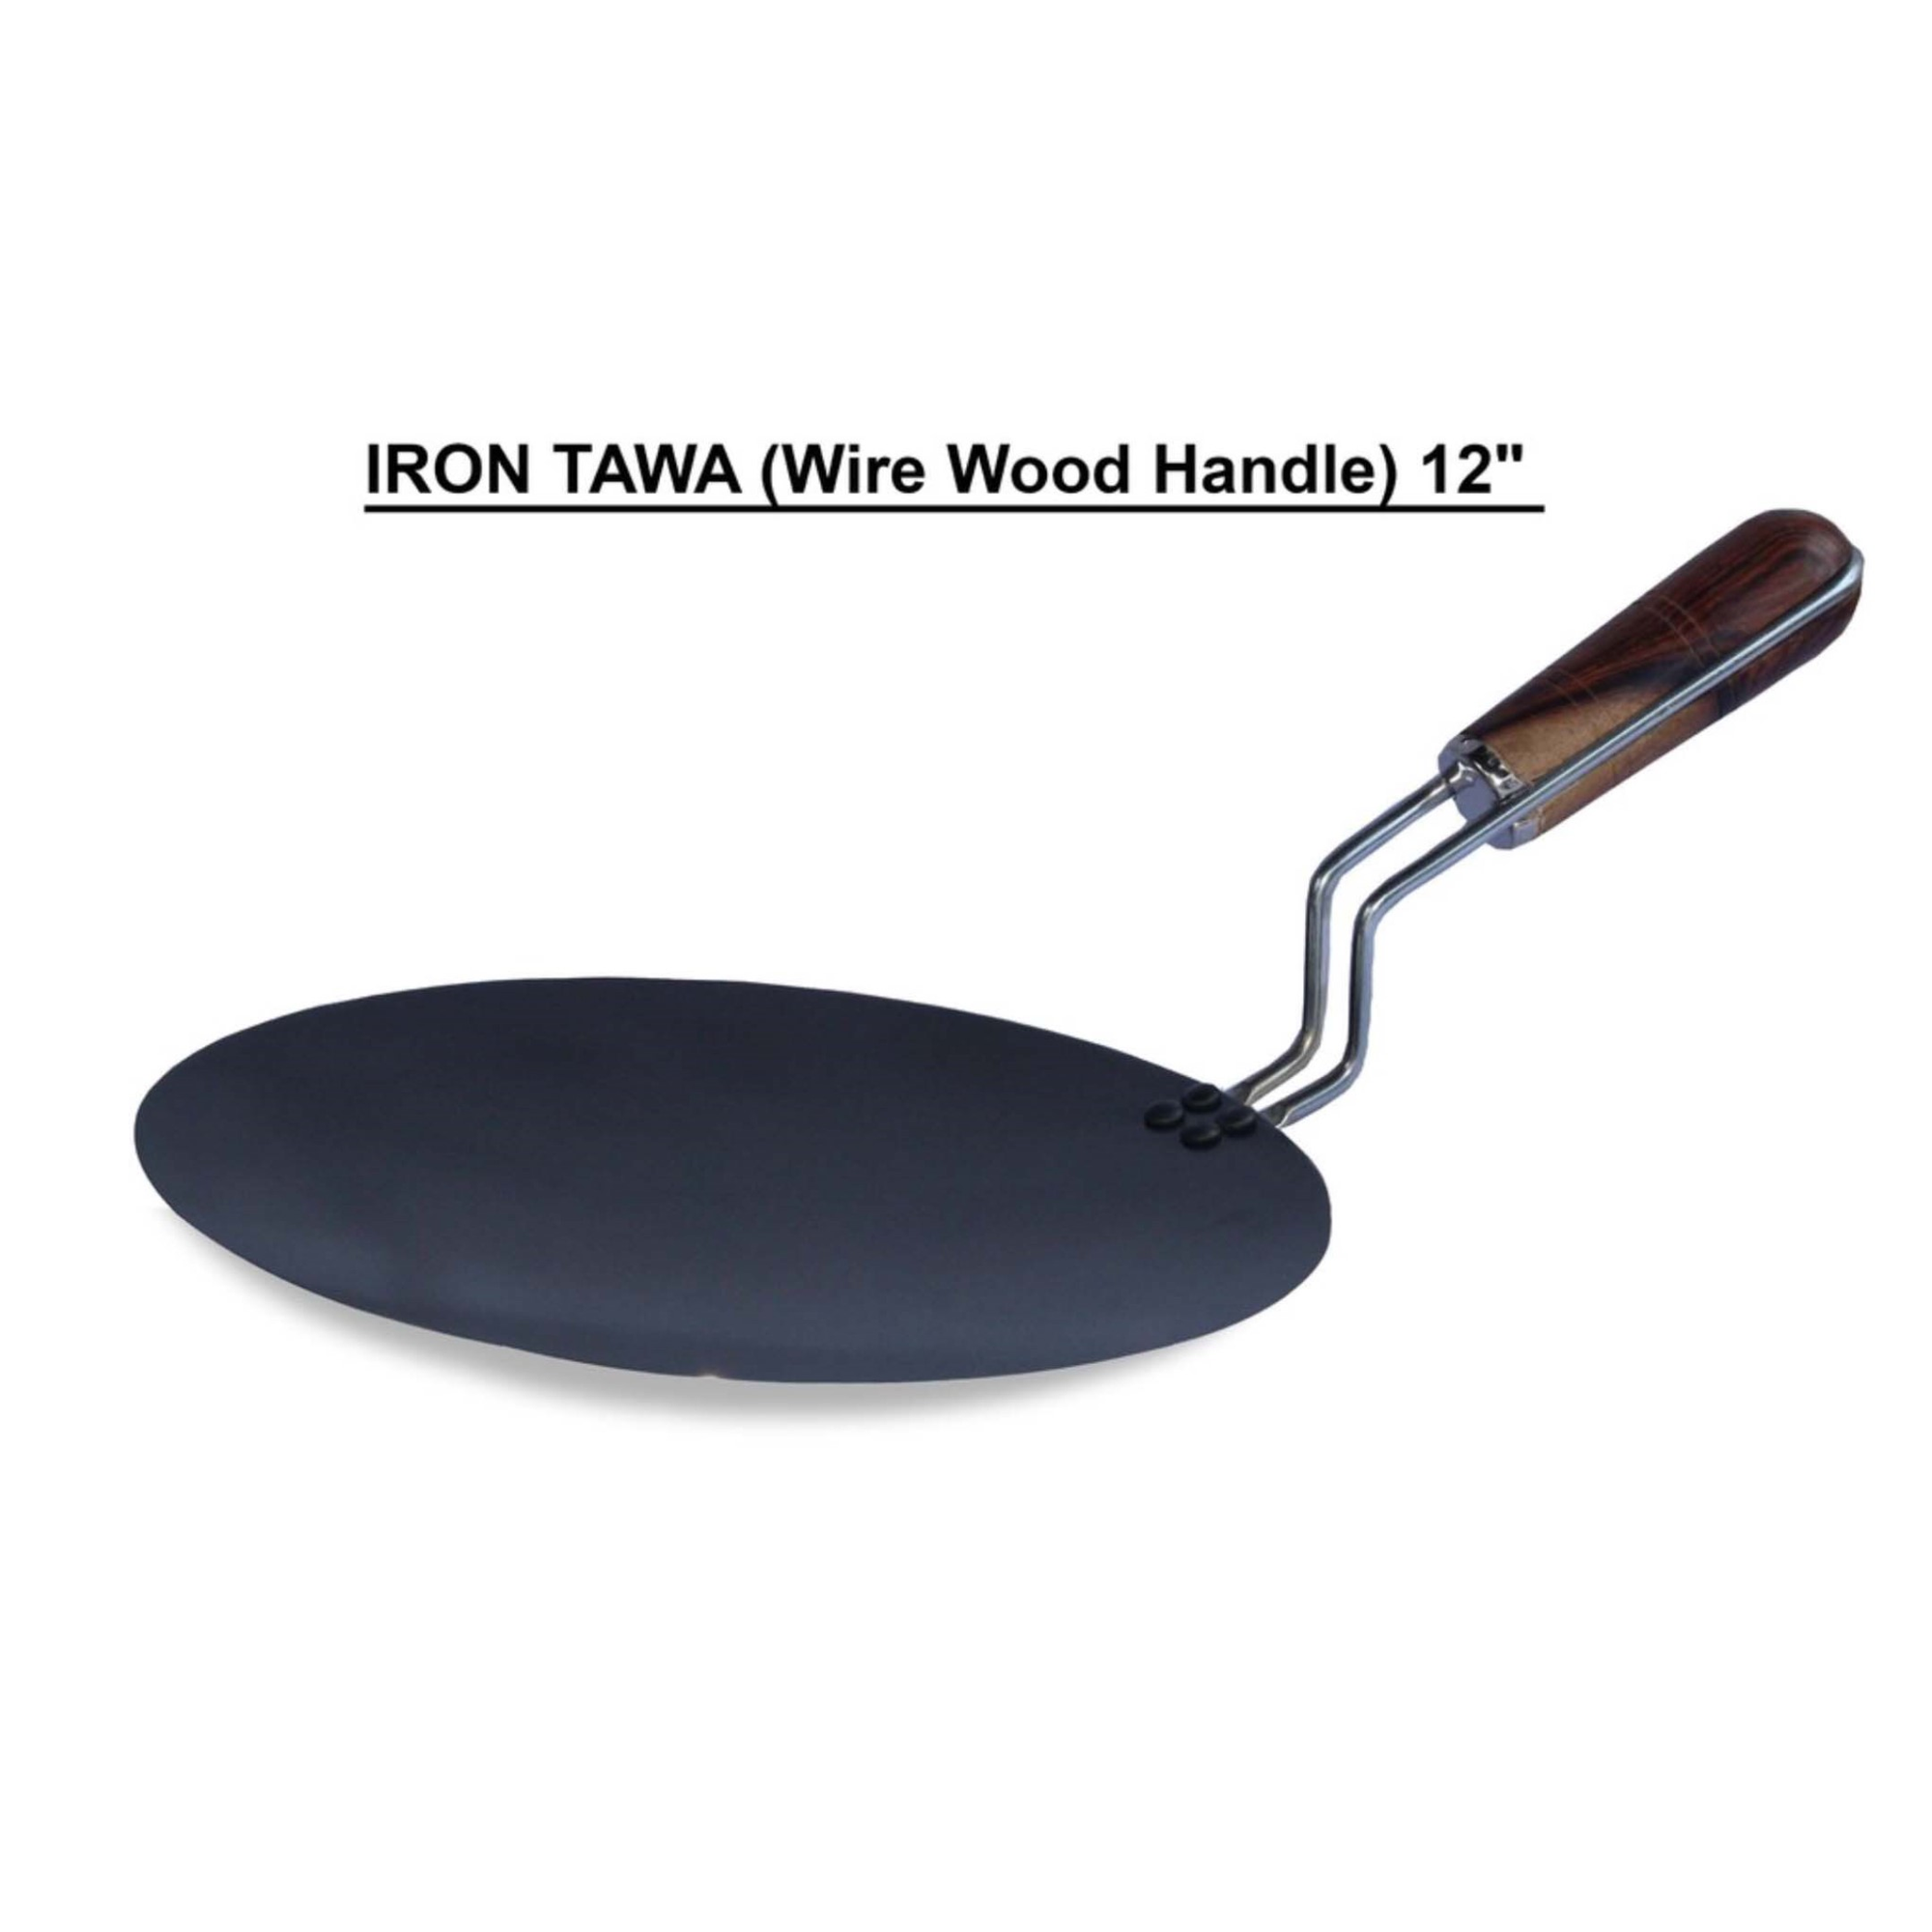 Iron Tawa Wire Wood Handle - 12 Inches